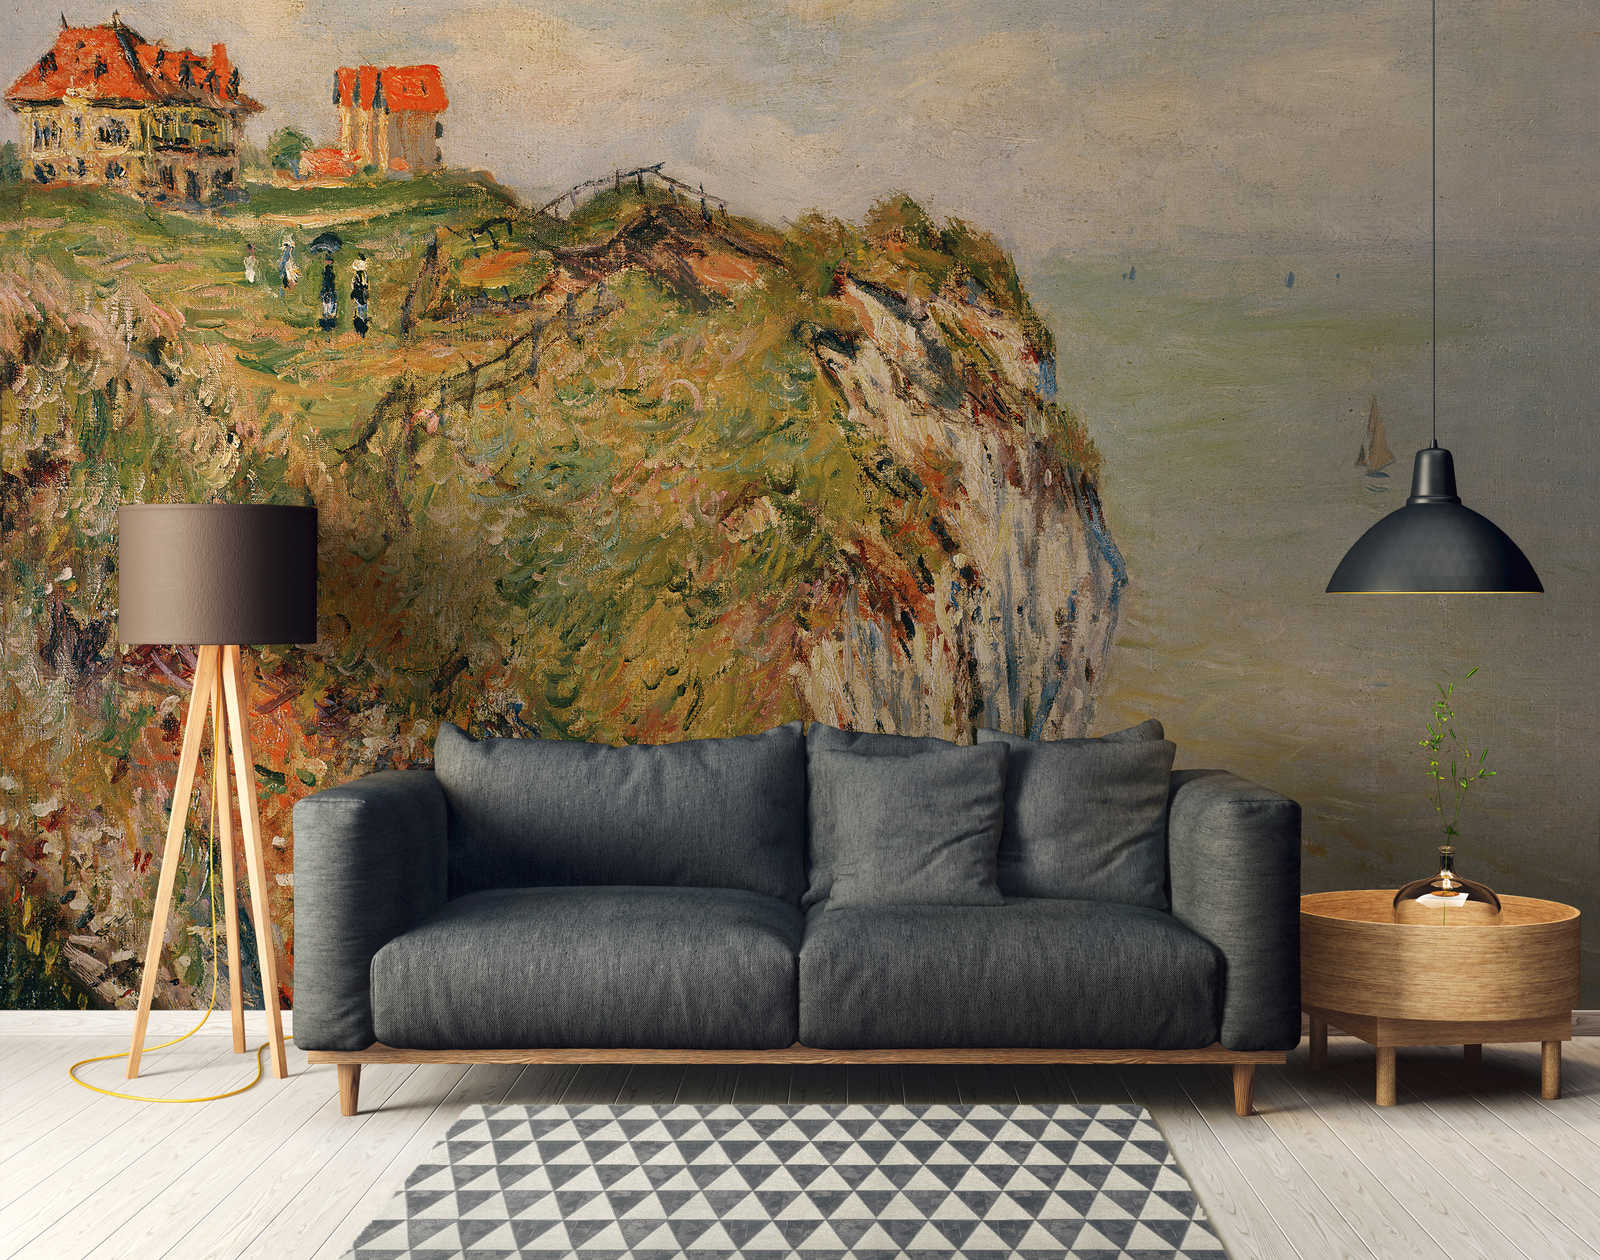             Photo wallpaper "Cliff near Dieppe" by Claude Monet
        